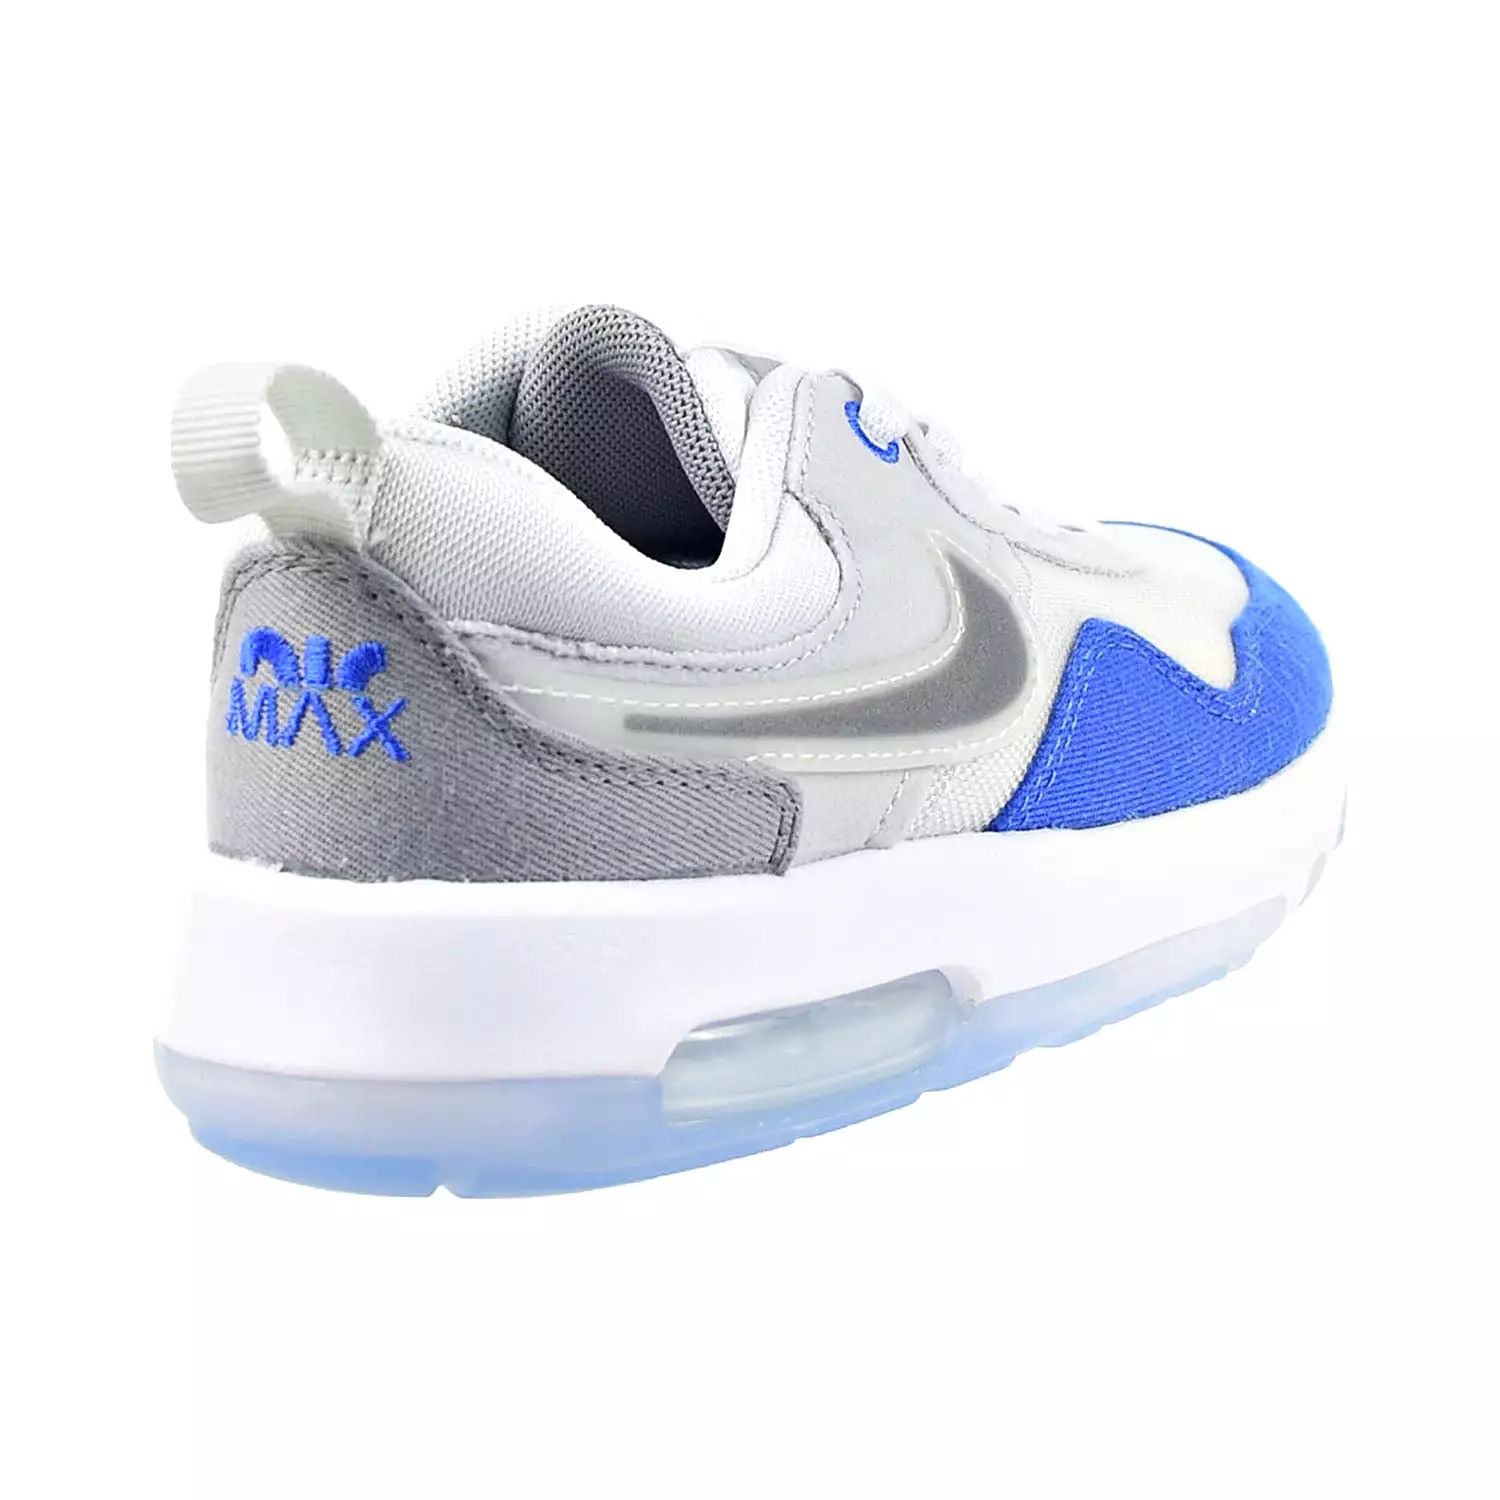 Nike Air Max Motif (PS) Little Kids' Shoes Hyper Royal-Black-Photon Dust